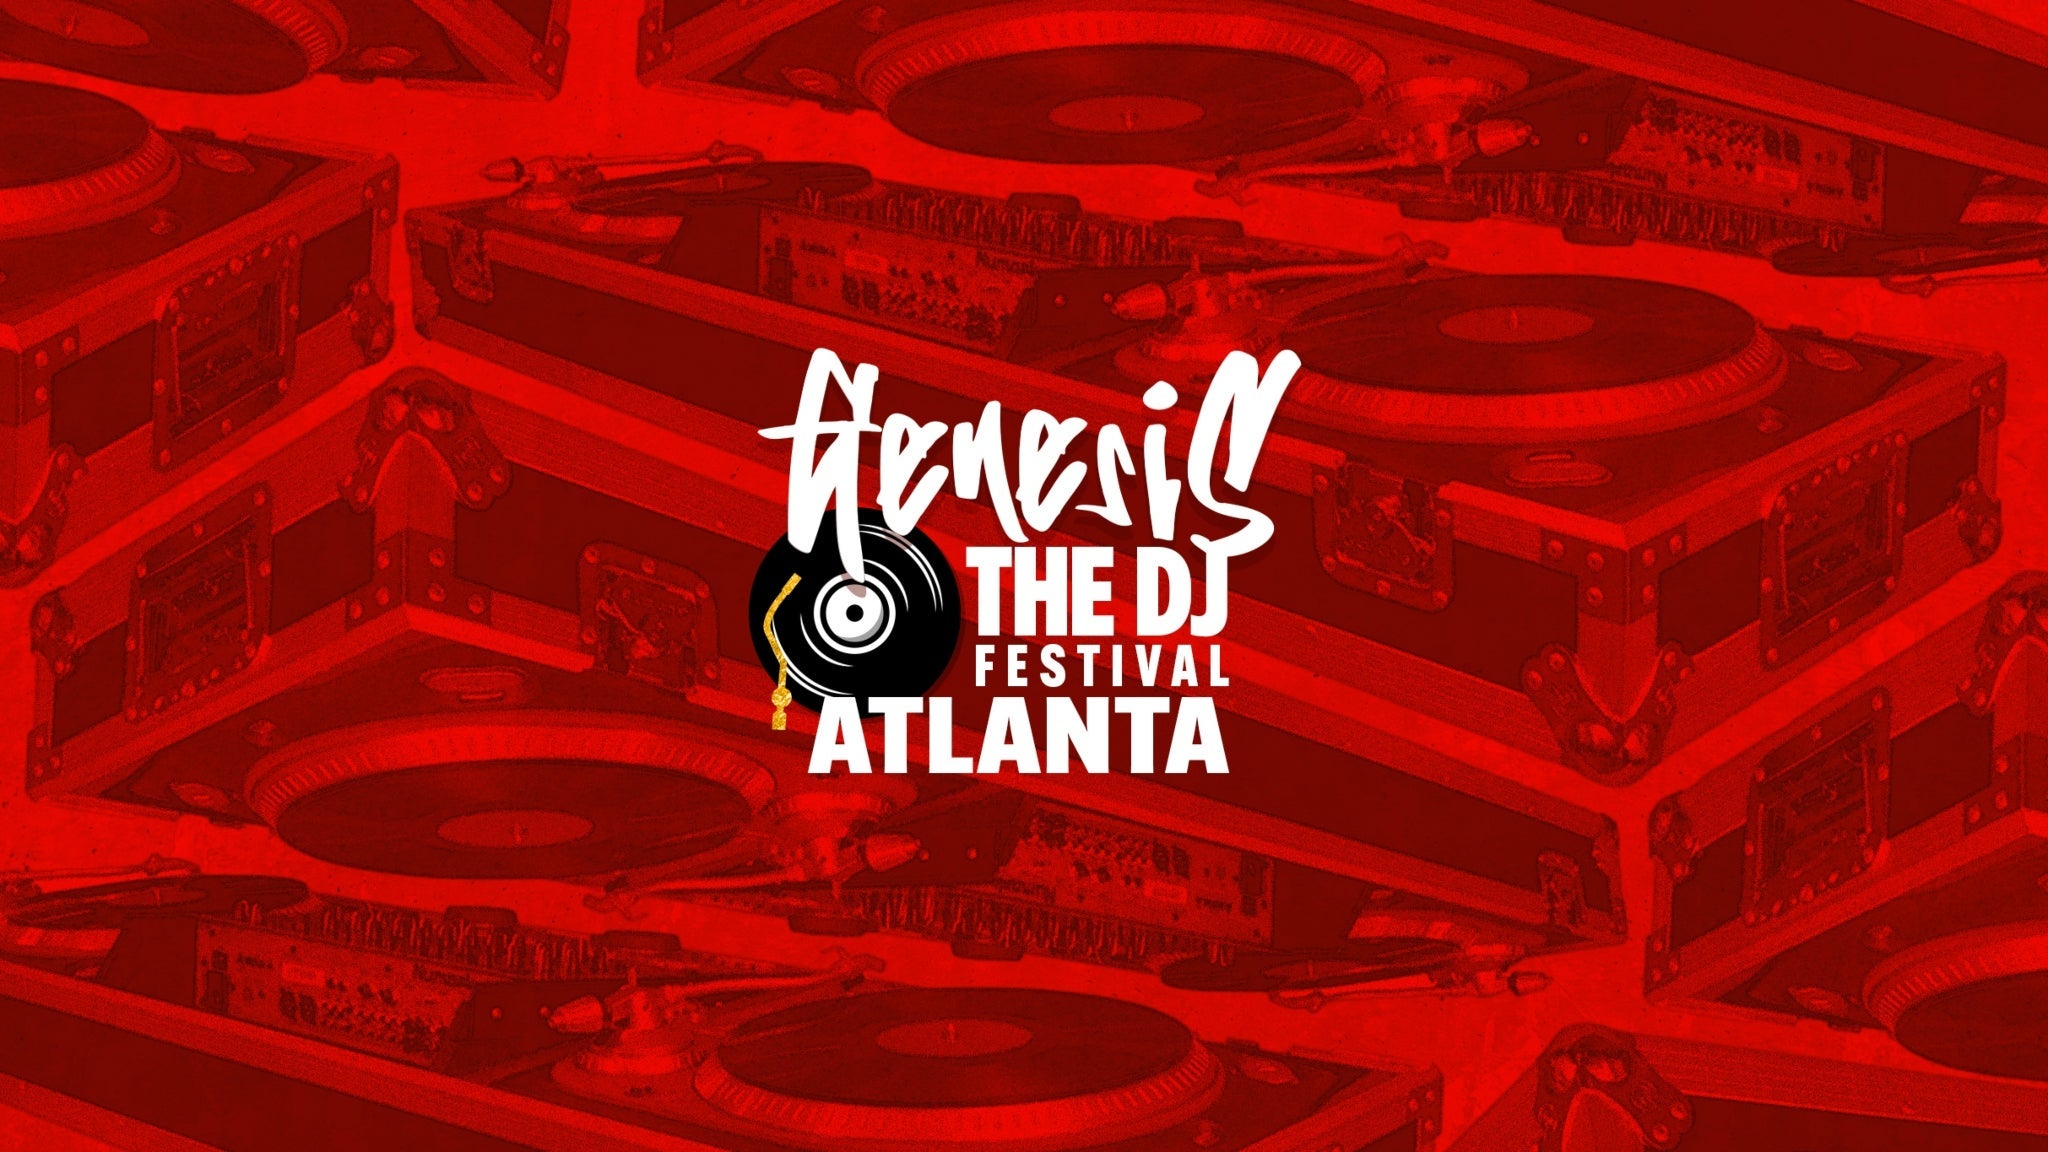 GENESIS THE DJ FESTIVAL ATLANTA: A HIP HOP 50TH CELEBRATION Day Pass in Atlanta promo photo for Early Bird presale offer code